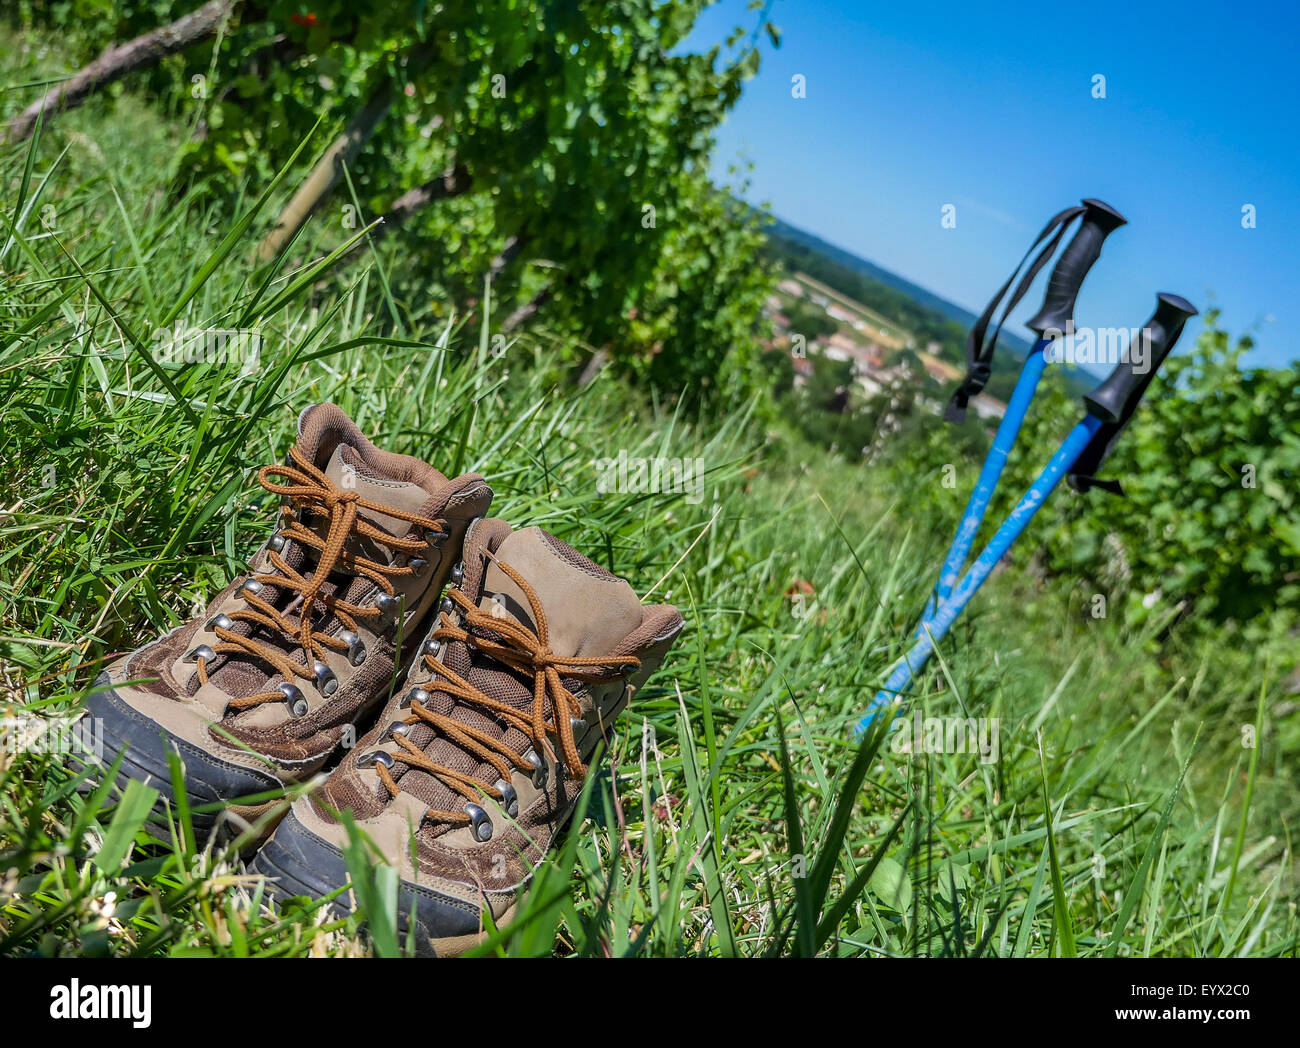 Wein Tourismus-Paar Wanderschuhe in den Rasen umgeben Weinberge Stockfoto